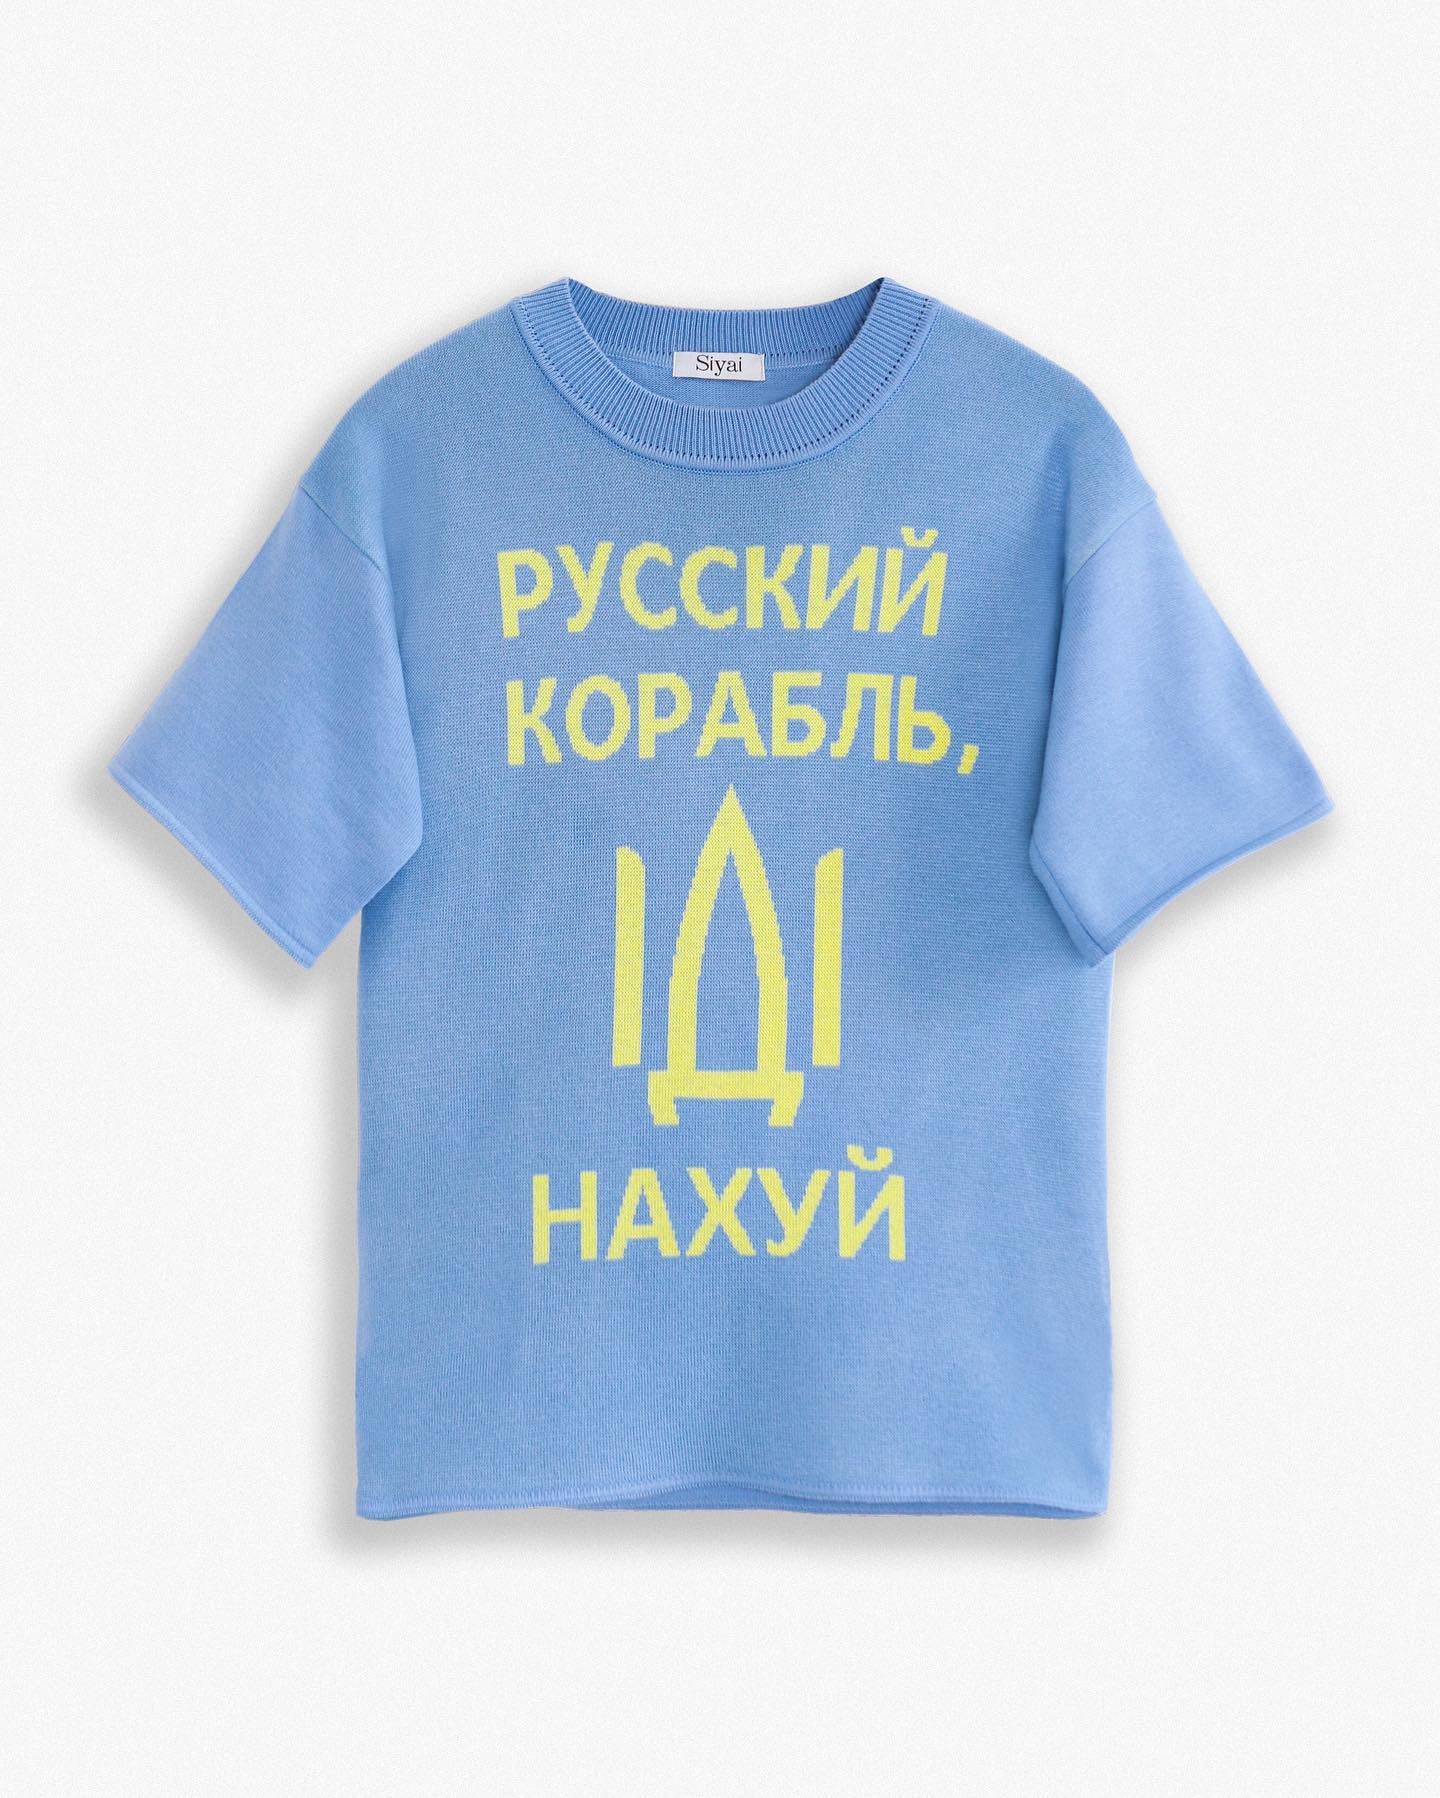 Siyai выпустил специальную коллекцию Ukraine. Фото: Instagram.com/siyai_brand/